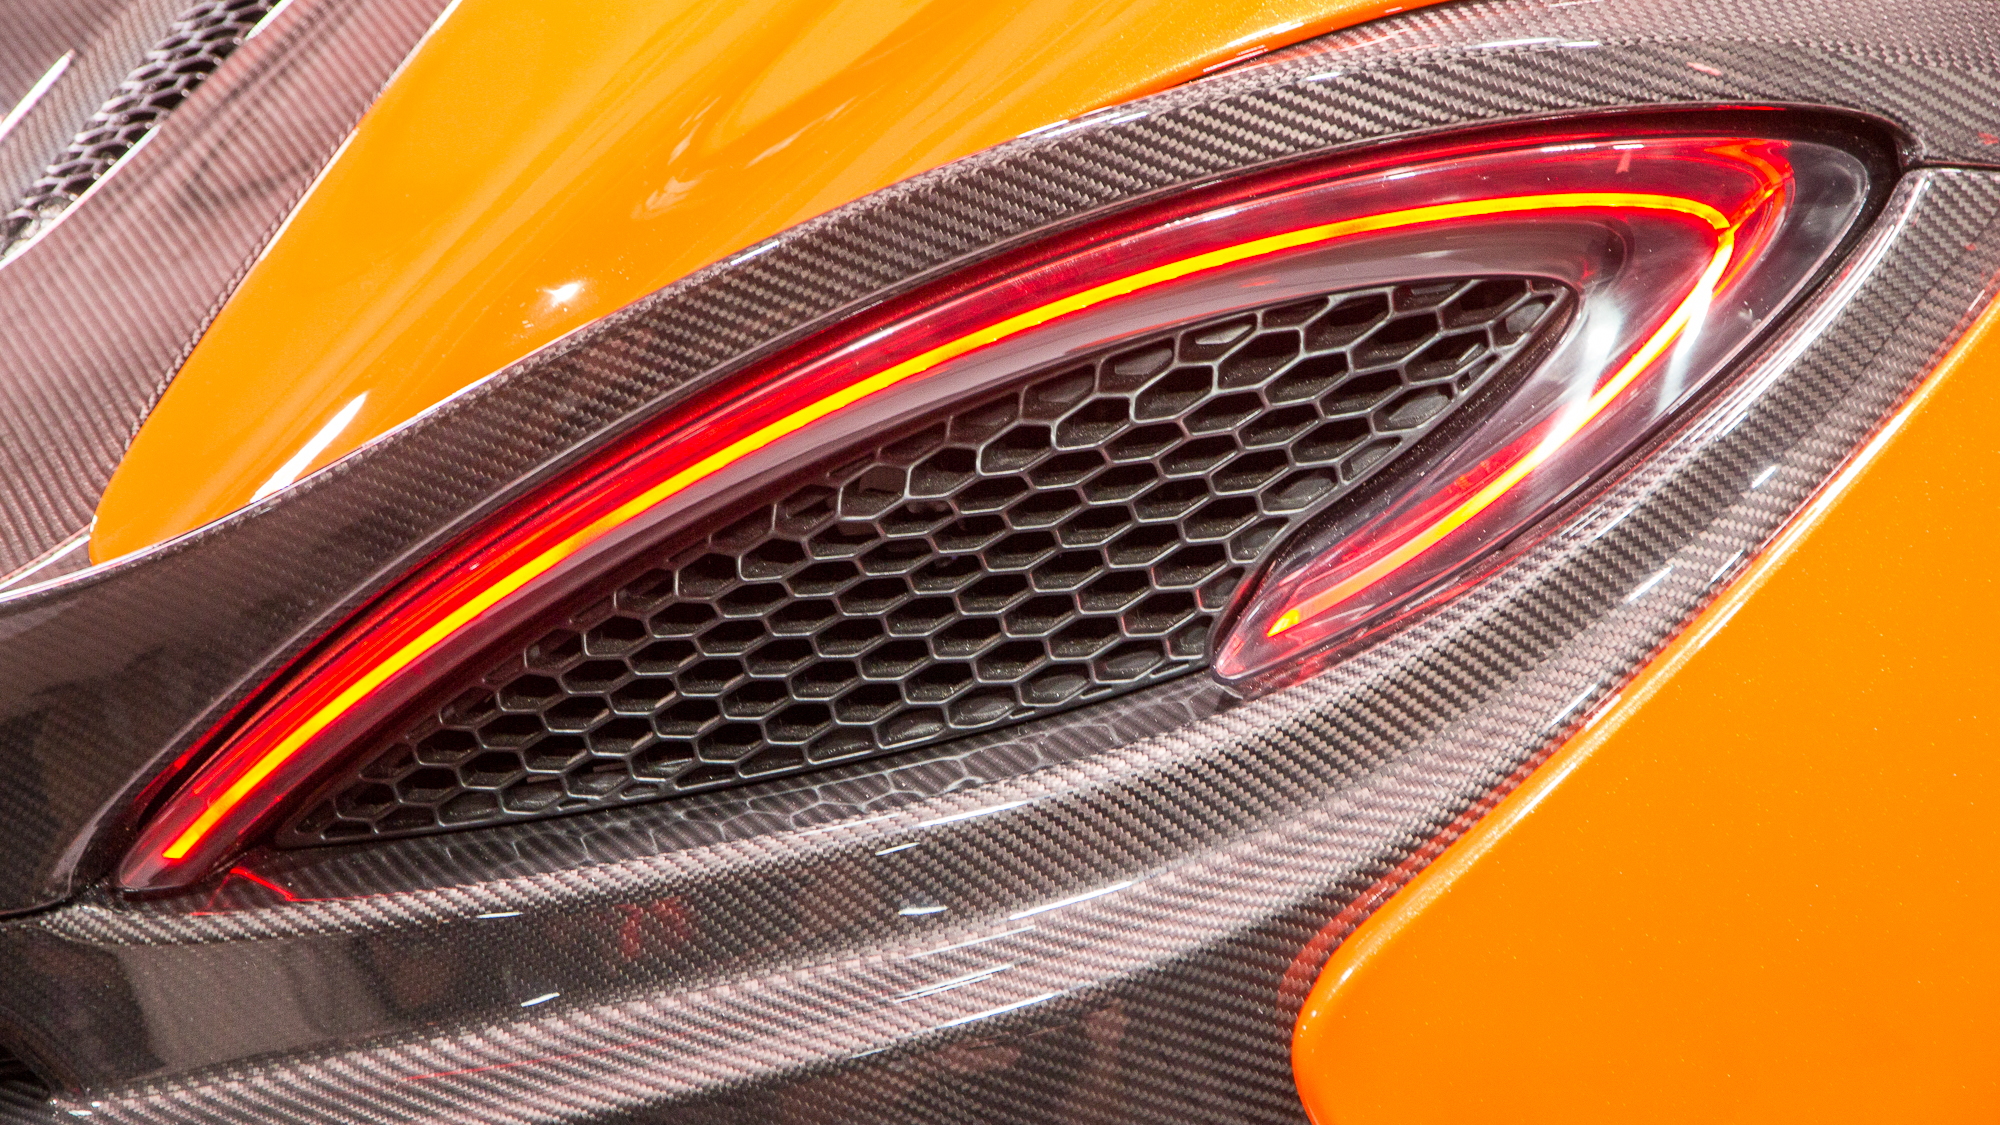 McLaren 570S Coupe live photos, 2015 New York Auto Show